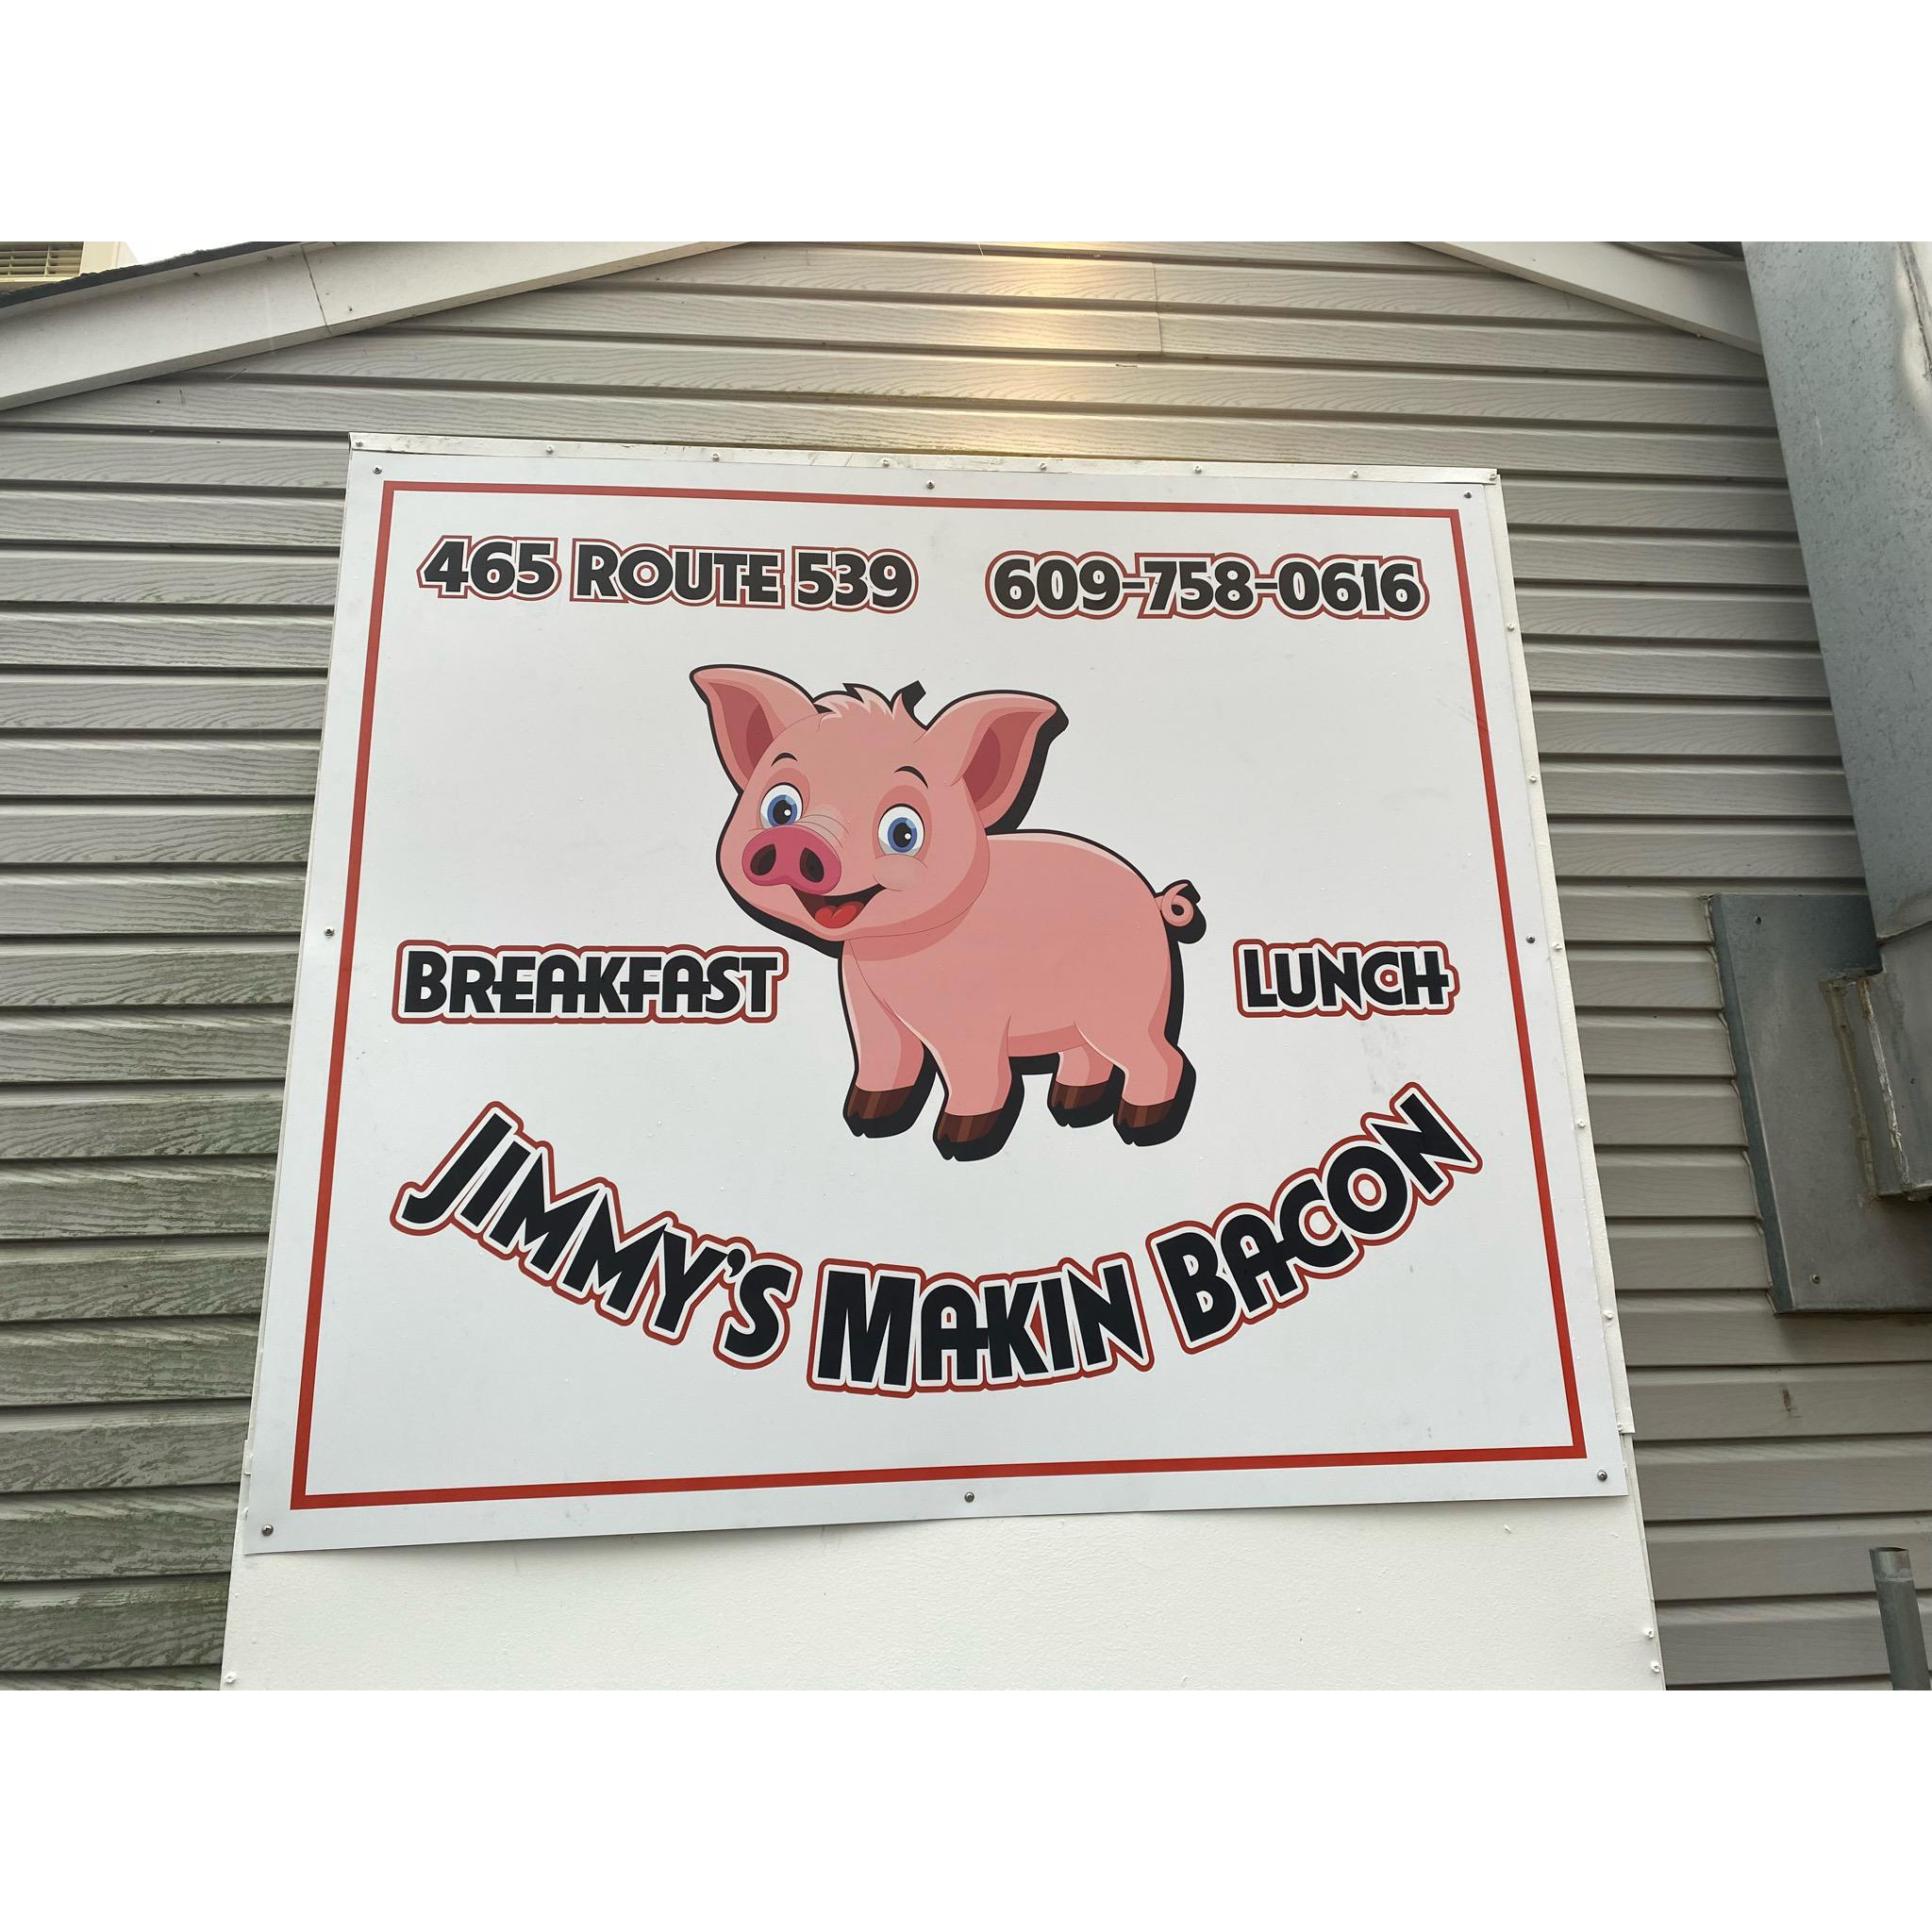 Jimmy's Makin Bacon - Cream Ridge, NJ 08514 - (609)758-0616 | ShowMeLocal.com